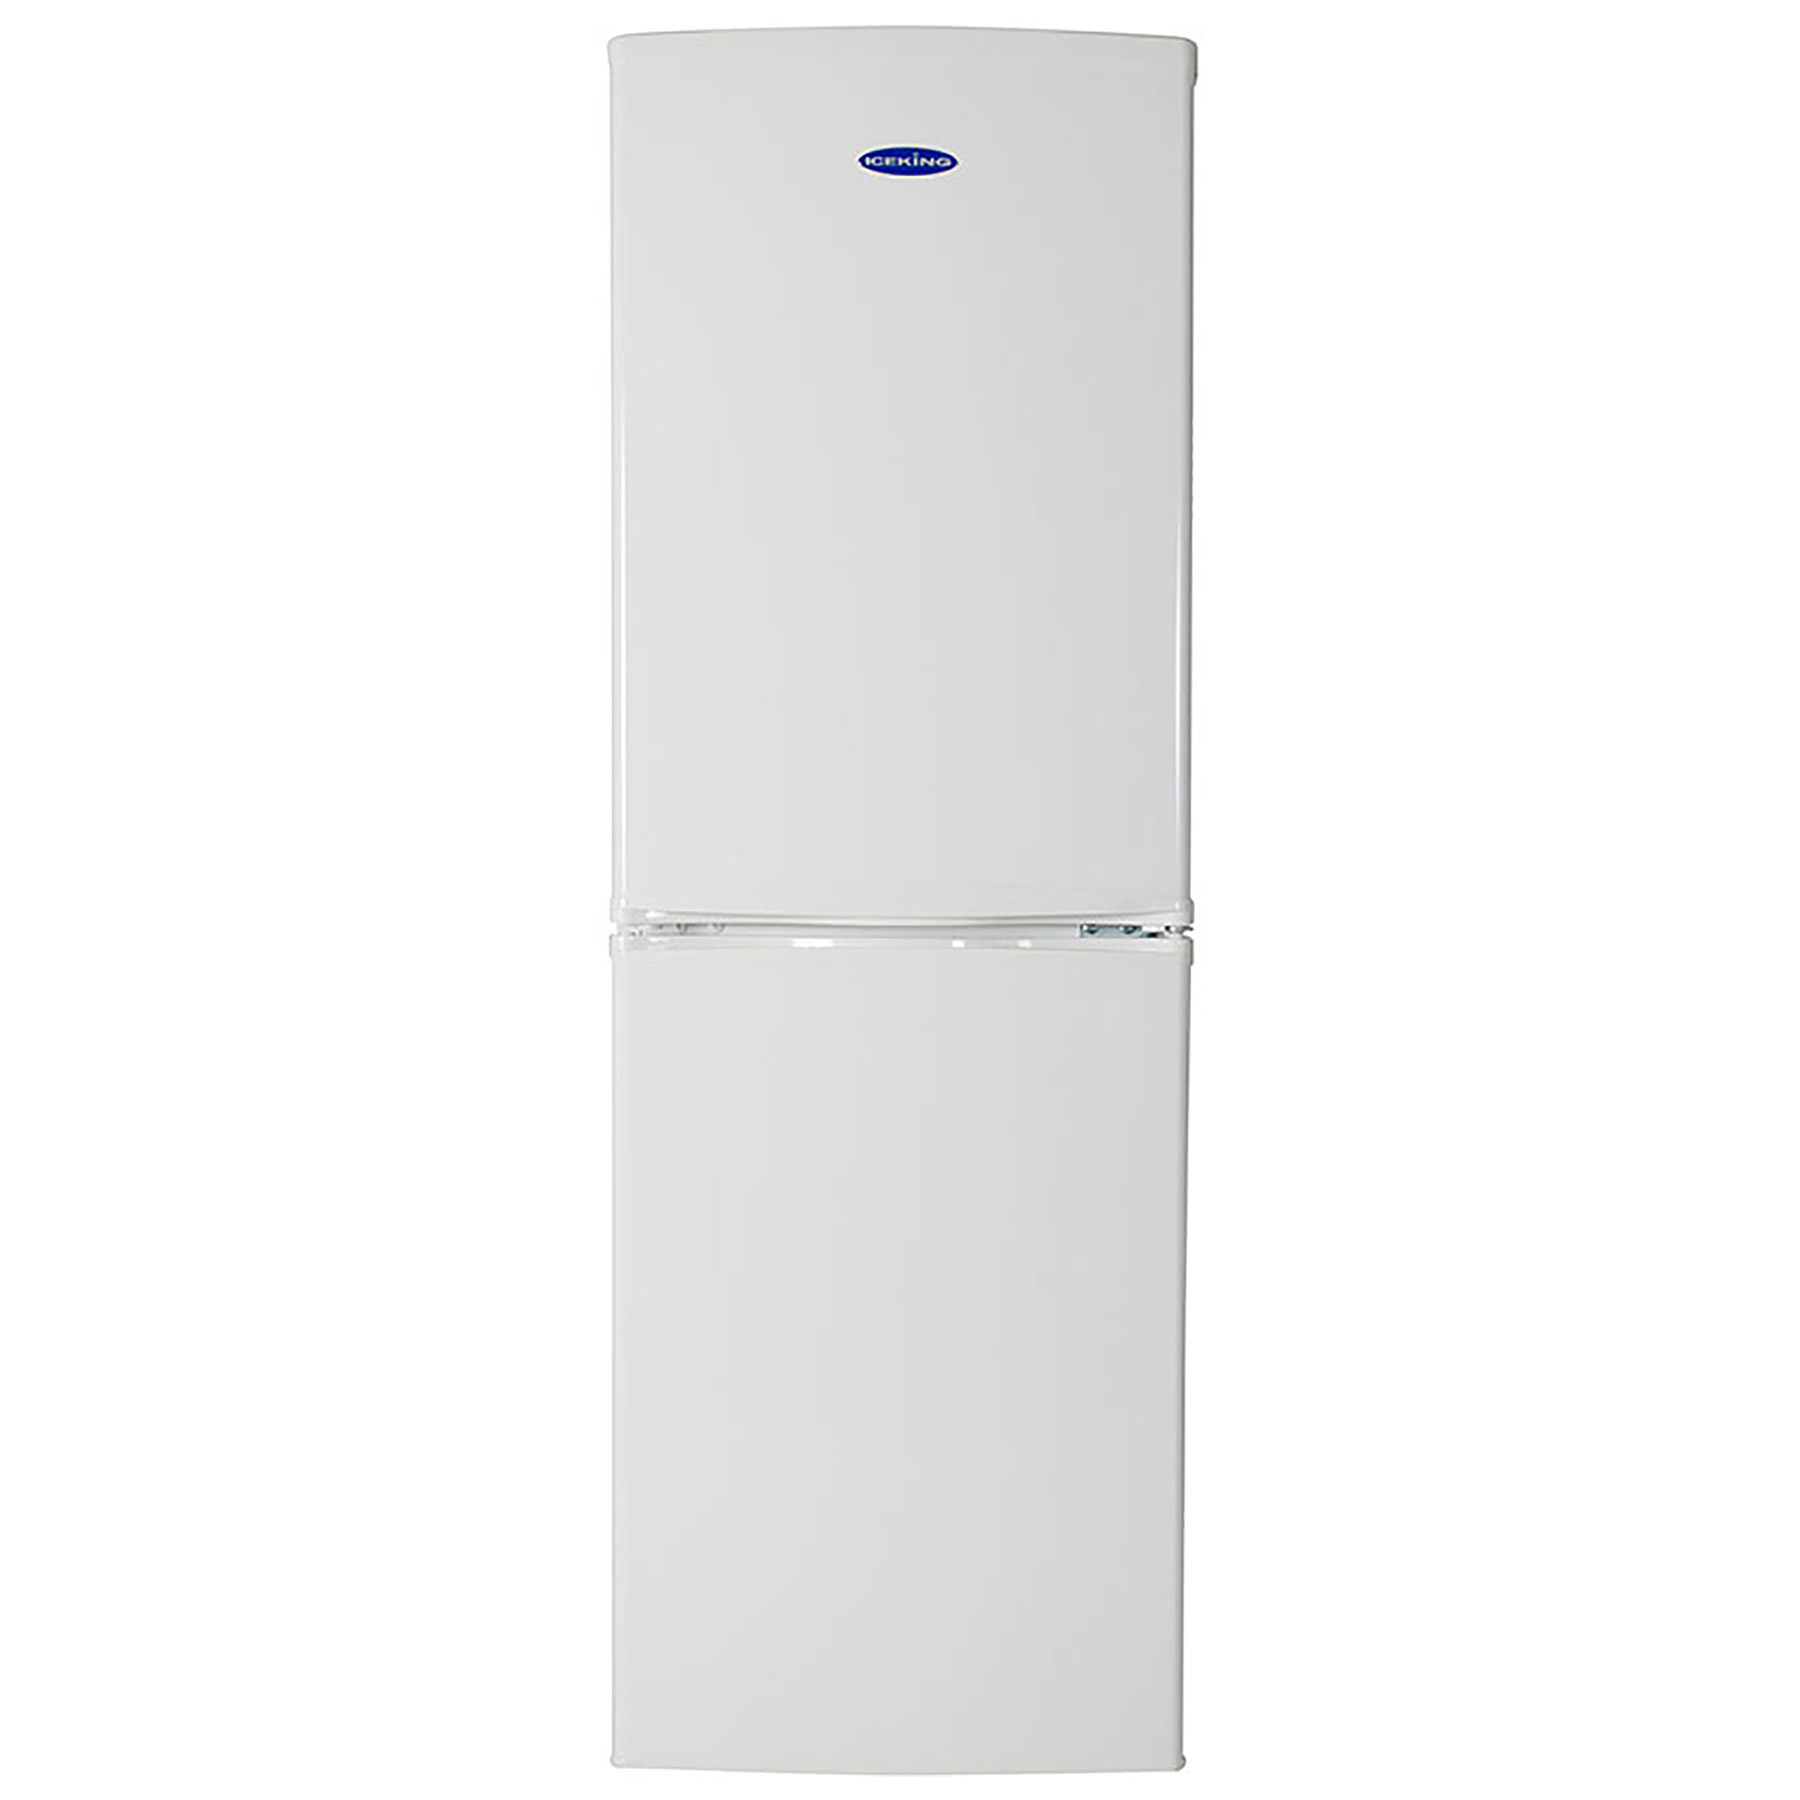 Iceking IK8951AP2 48cm Fridge Freezer in White 1 45m F Rated